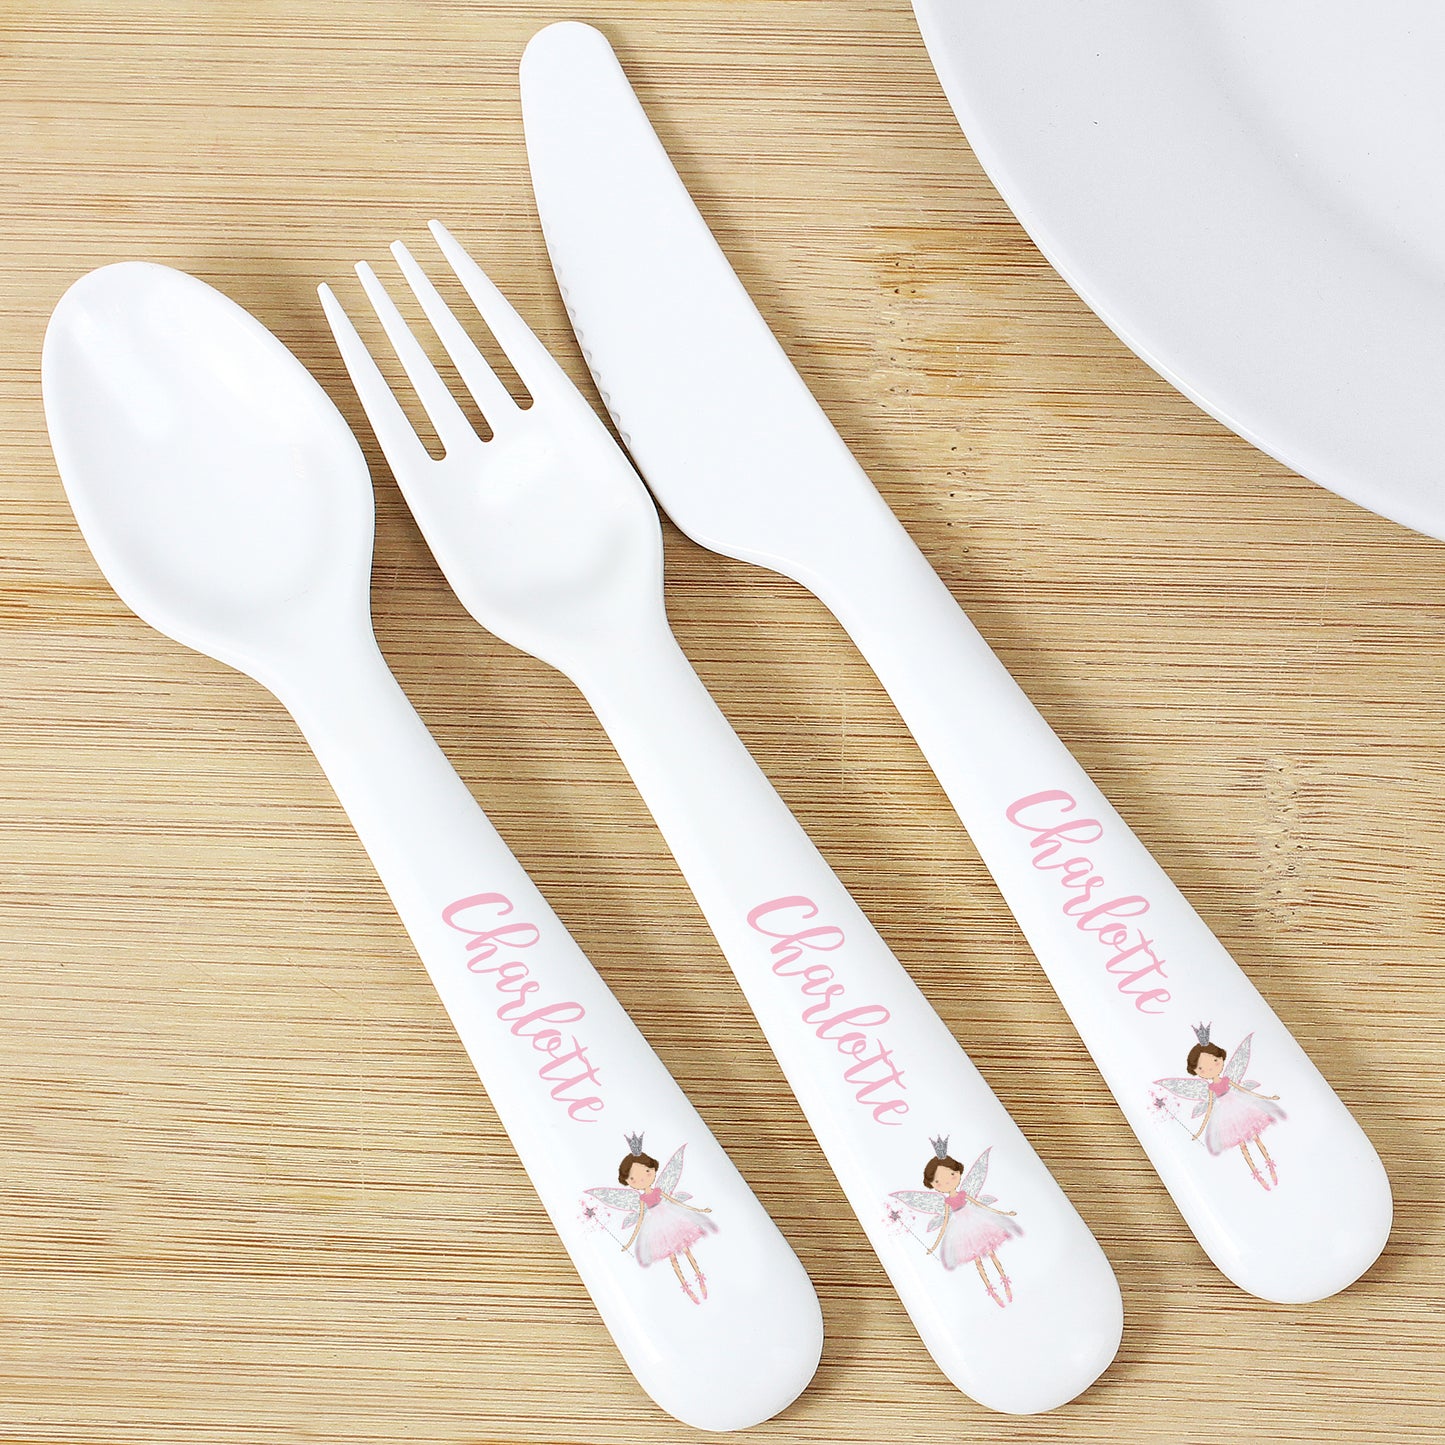 Personalised Fairy Princess 3 Piece Plastic Cutlery Set - Personalise It!